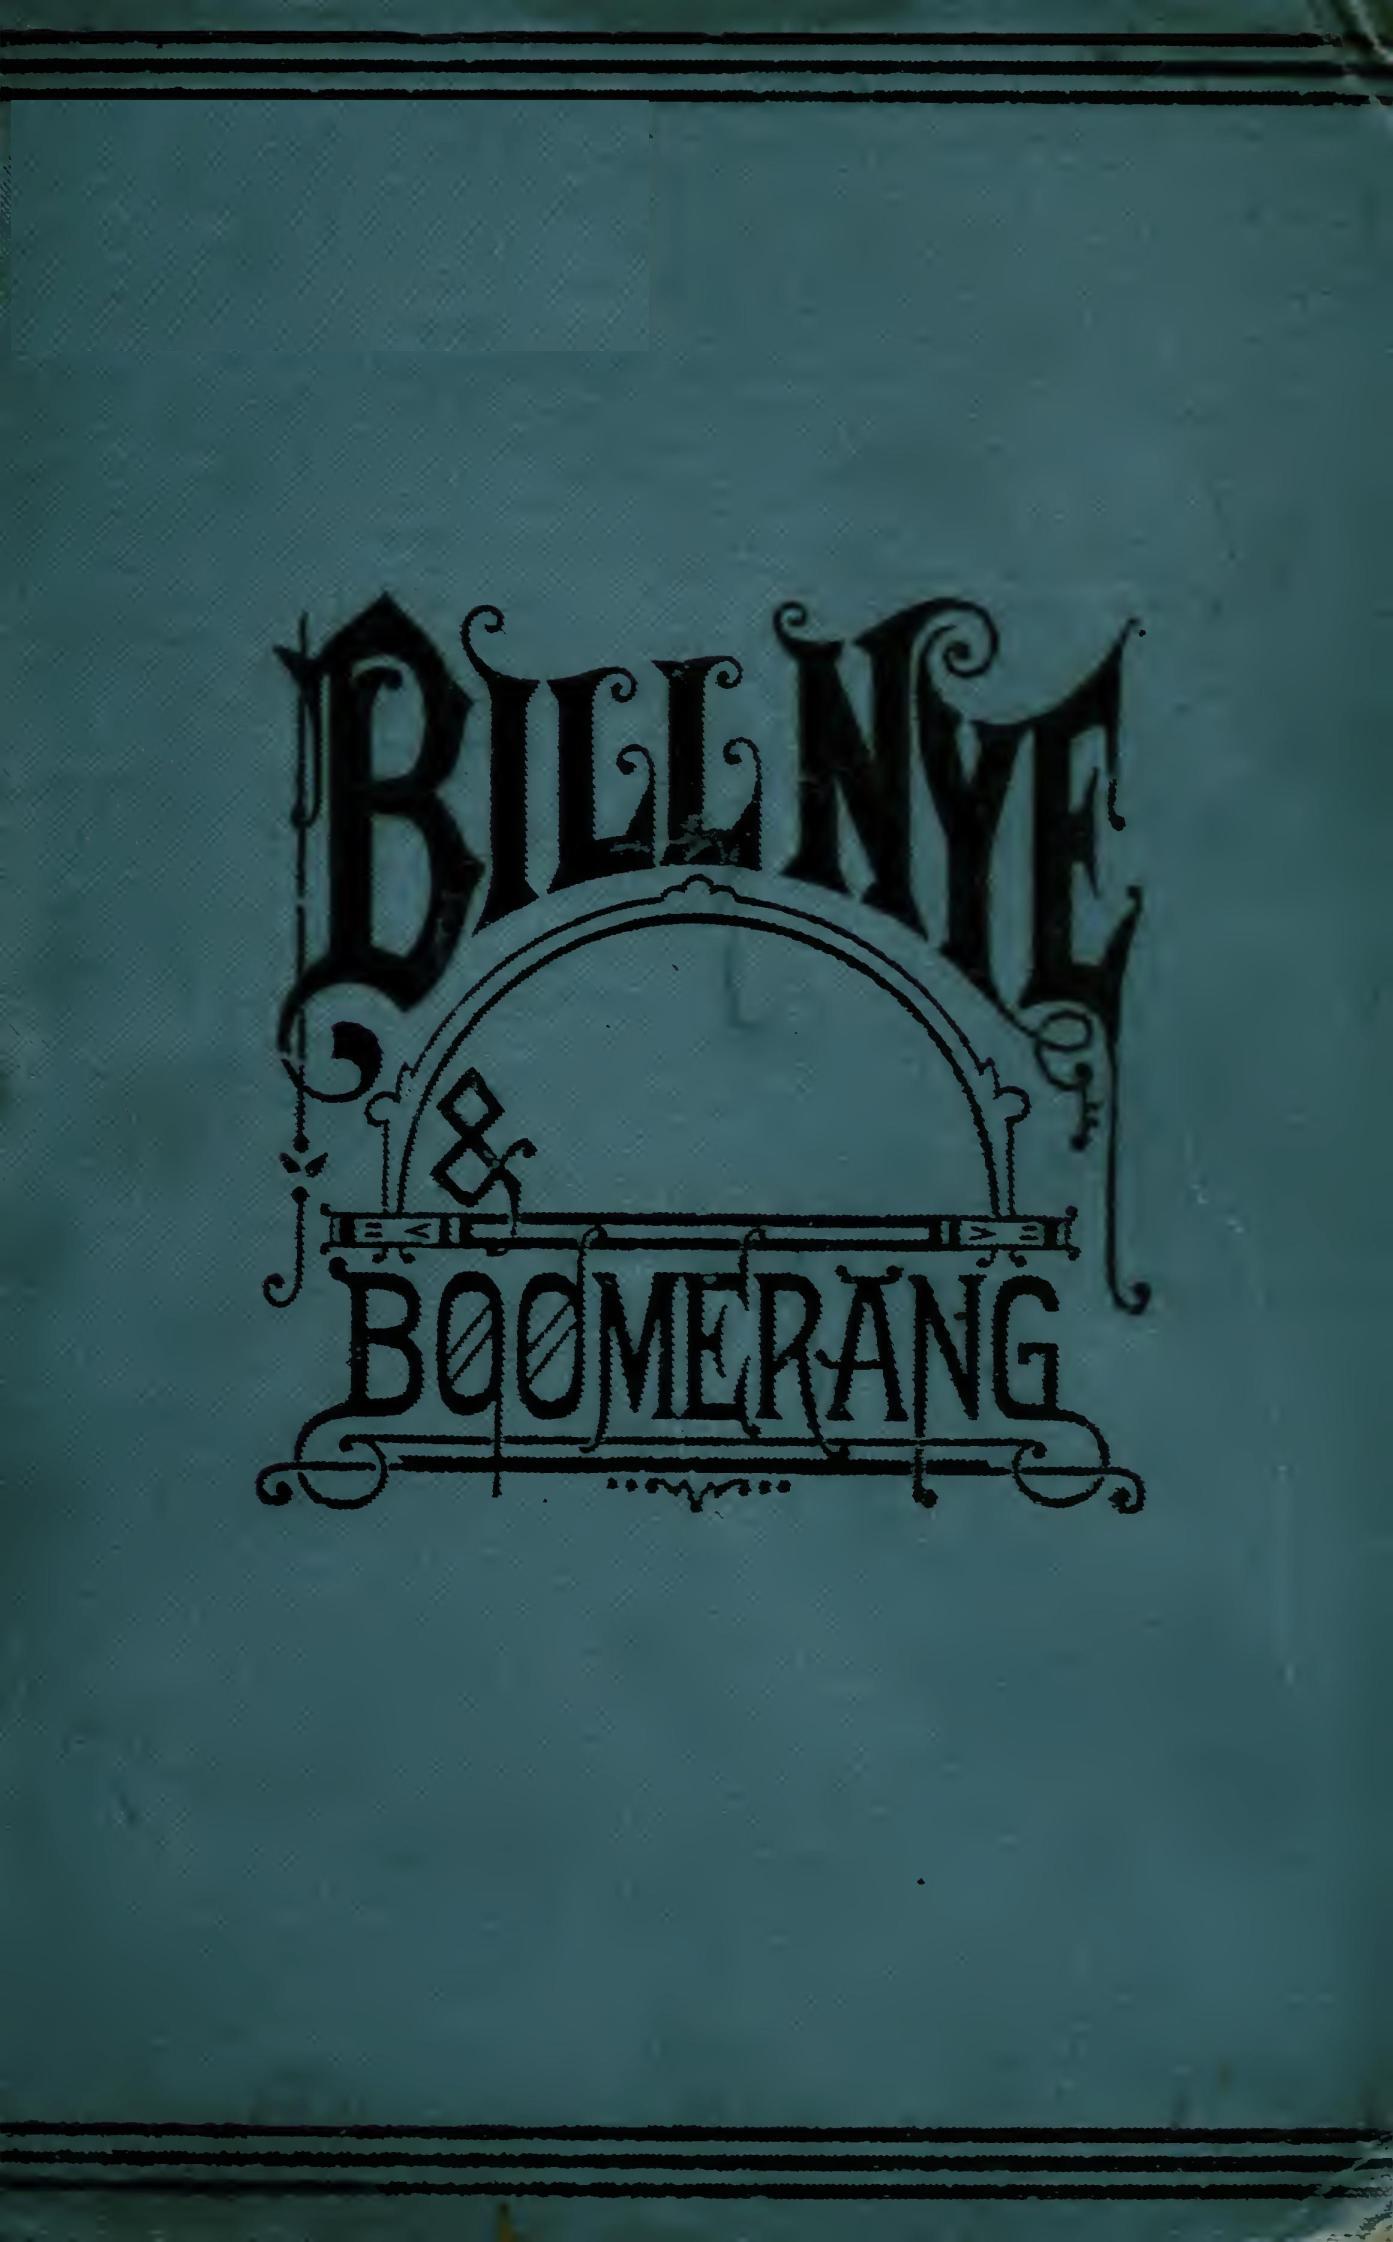 Bill Nye and Boomerang;, by Bill